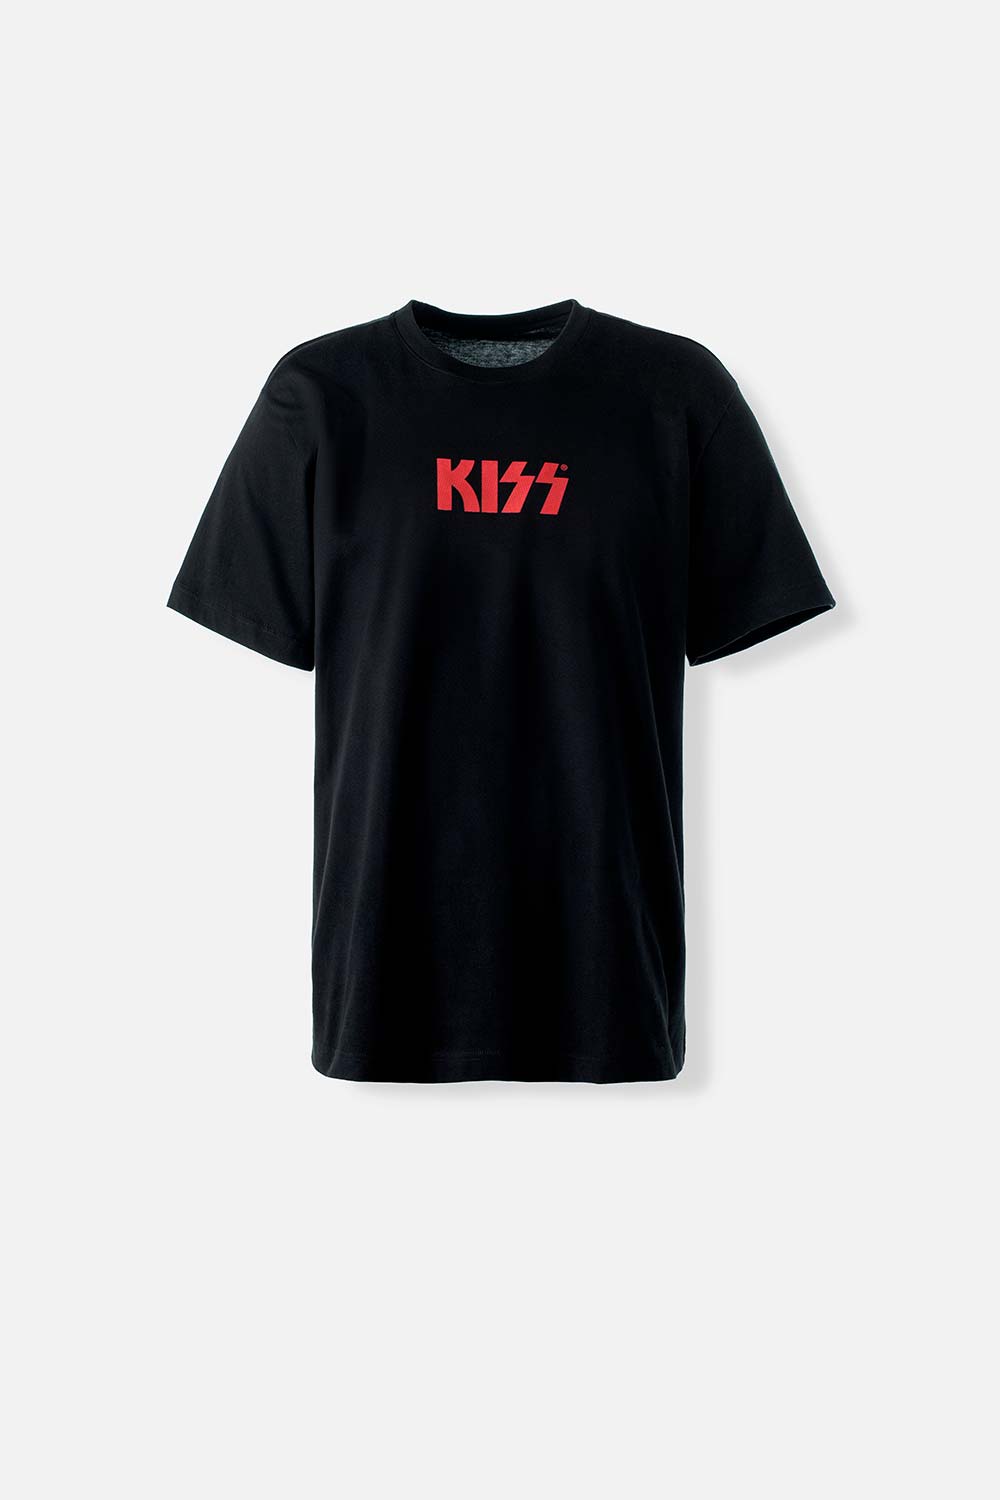 Camiseta de Kiss negra manga corta género neutro XS-0